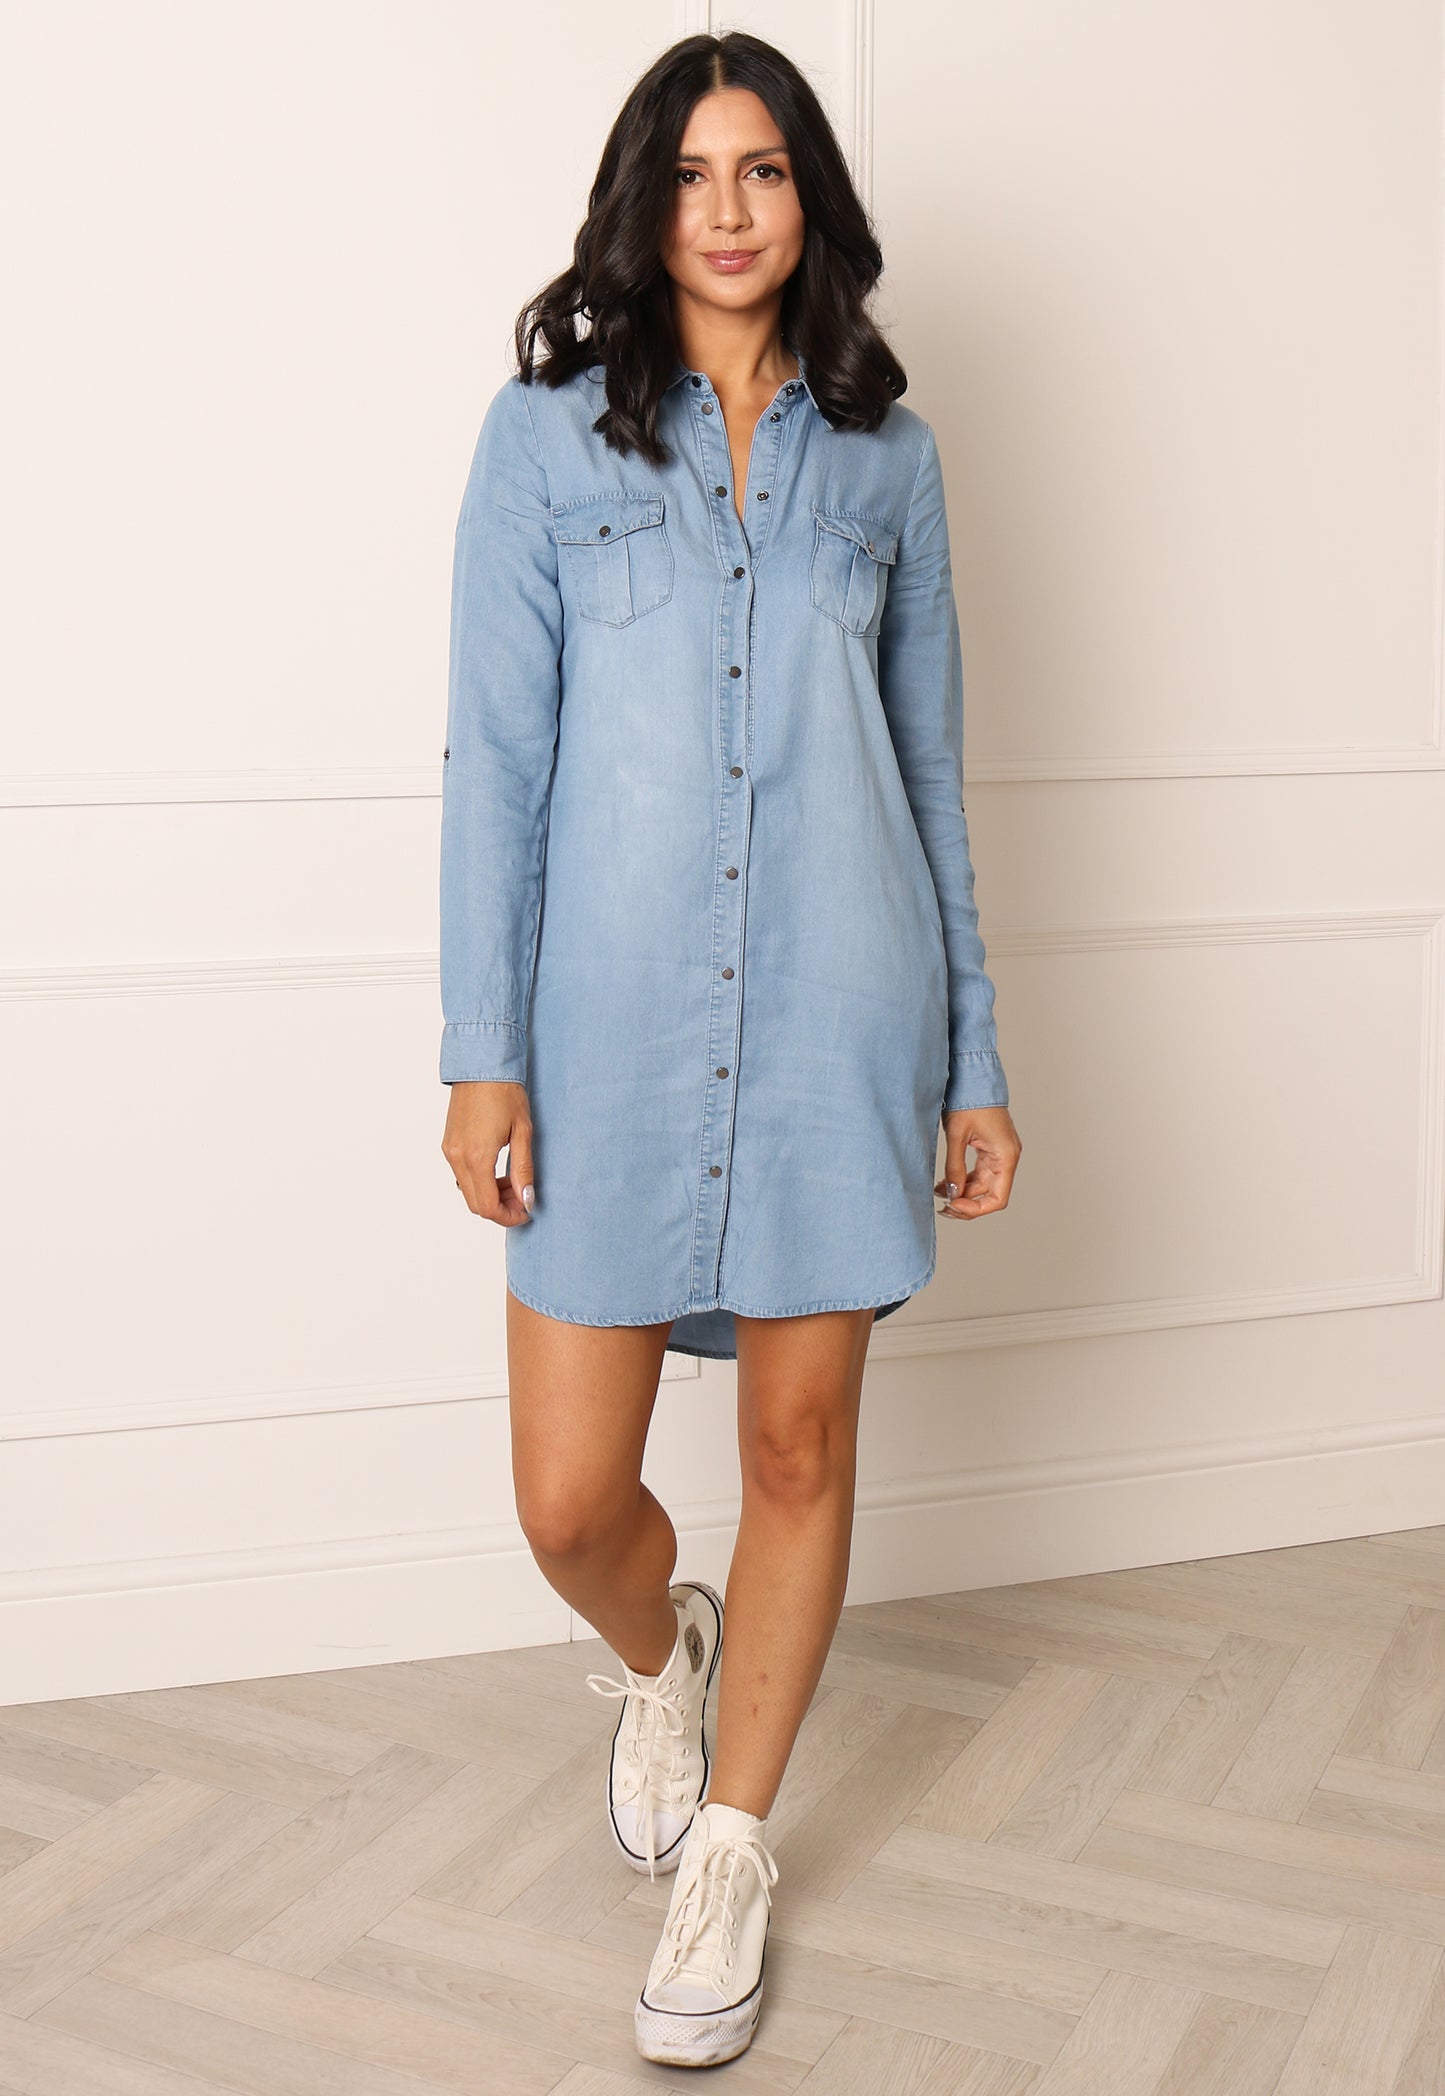 VERO MODA Silla Tencel Denim Button Mini Shirt Dress with Three Quarter Sleeves in Blue - concretebartops